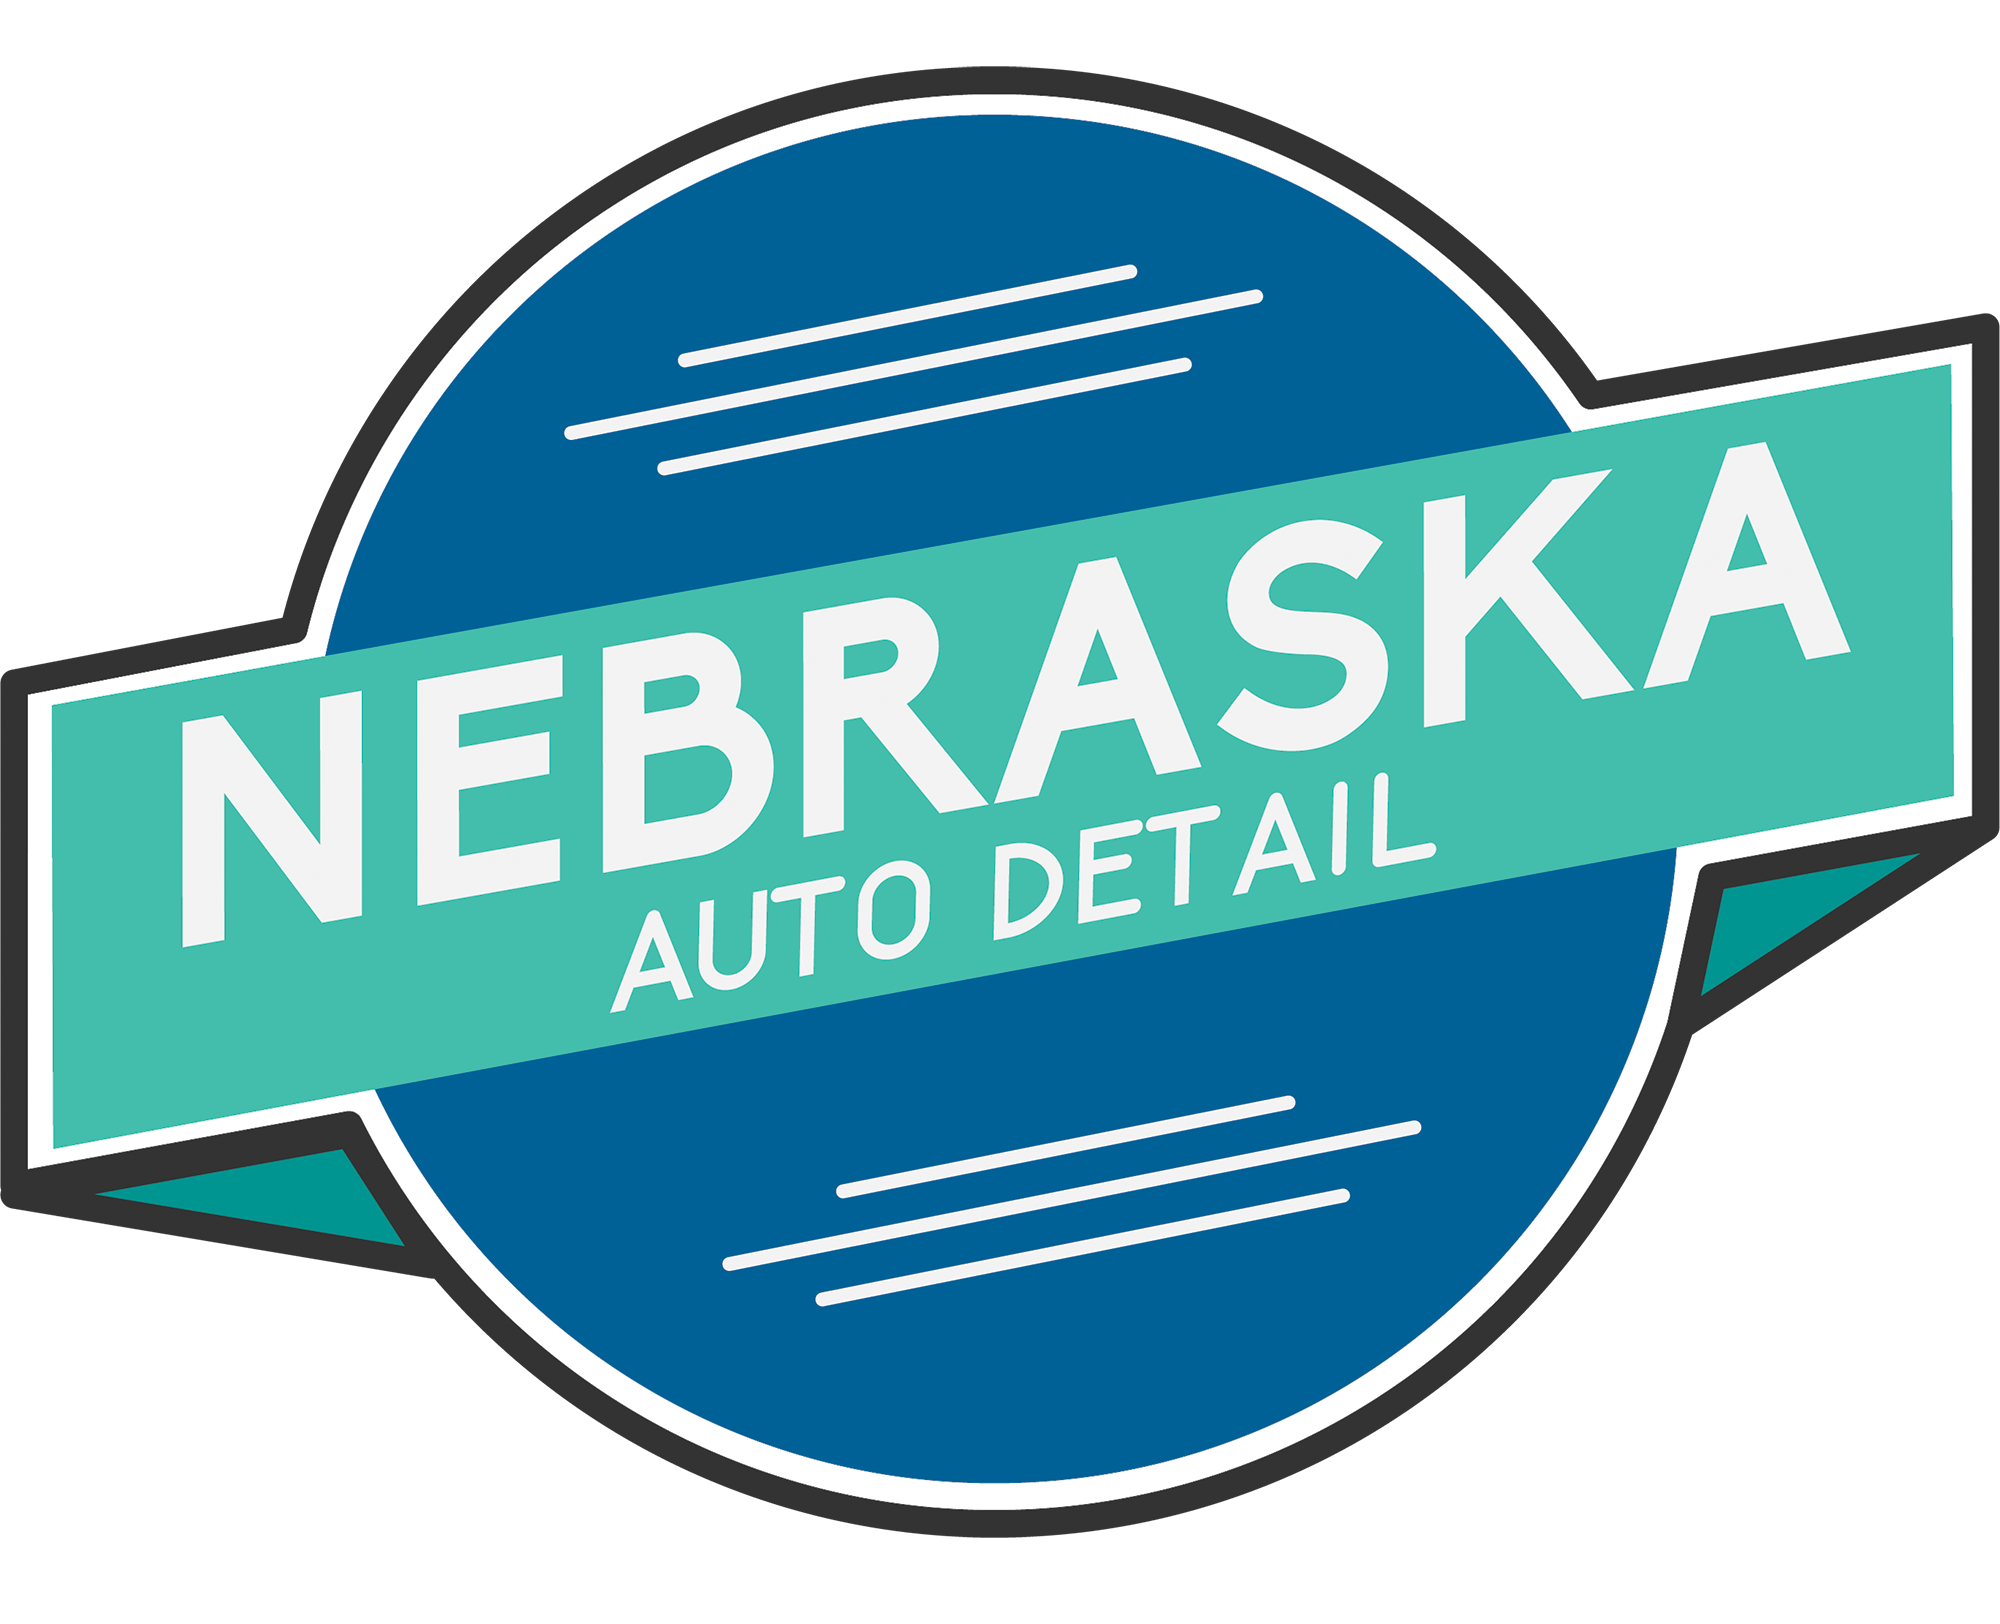 Quality Interior & Exterior Auto Detailing in Lincoln, Nebraska